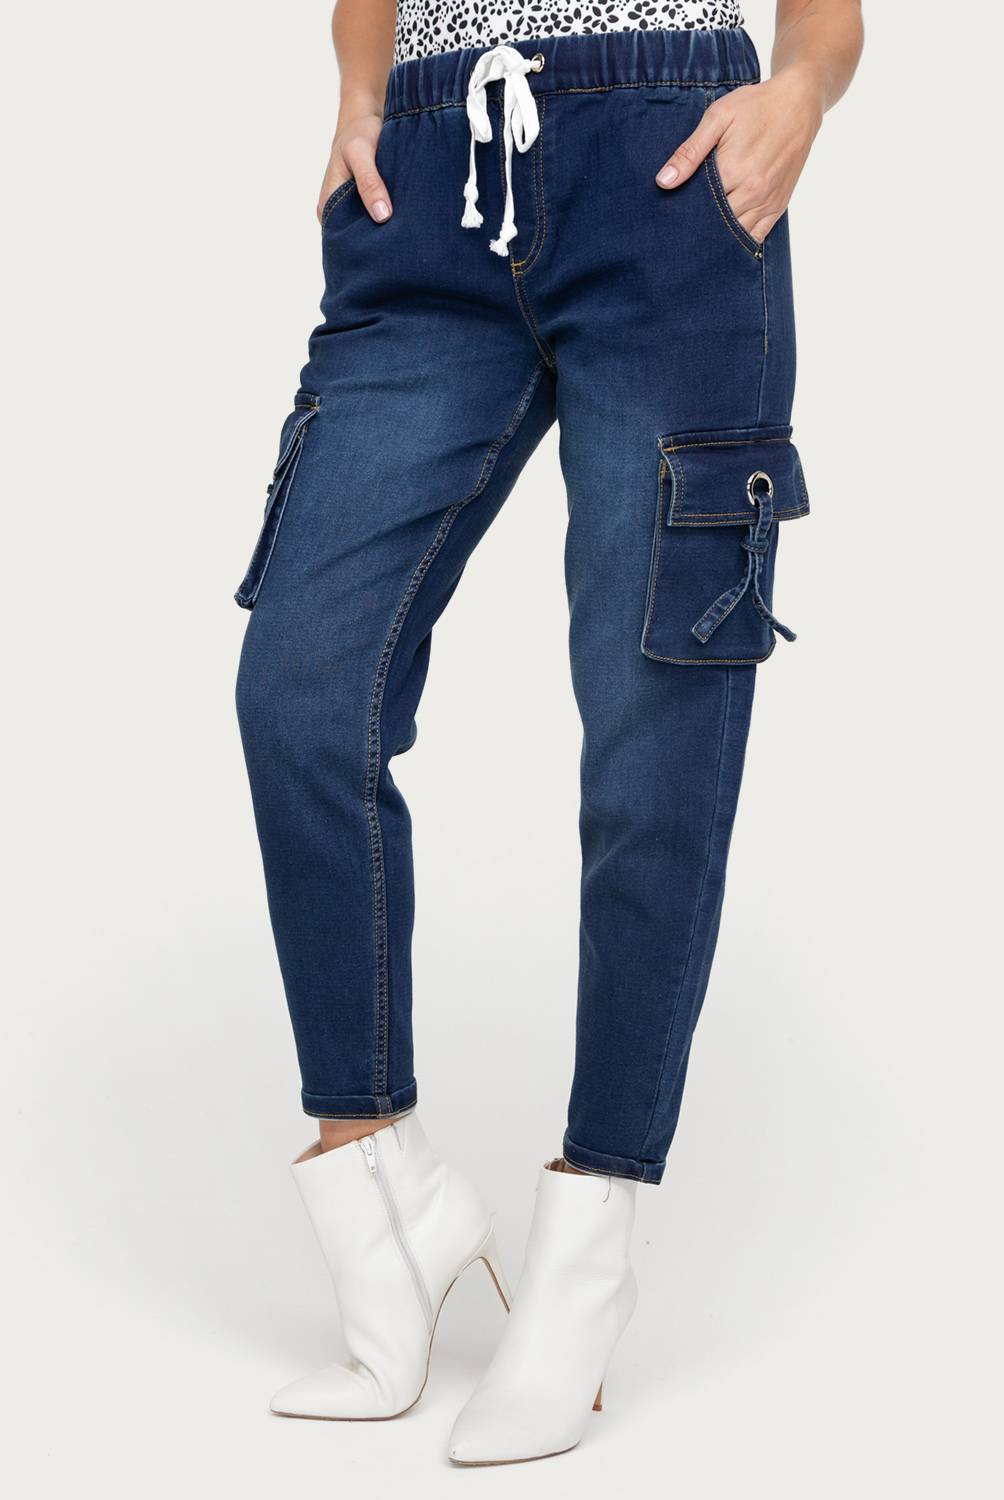 MOSSIMO - Jeans Jogger Tiro Alto Mujer